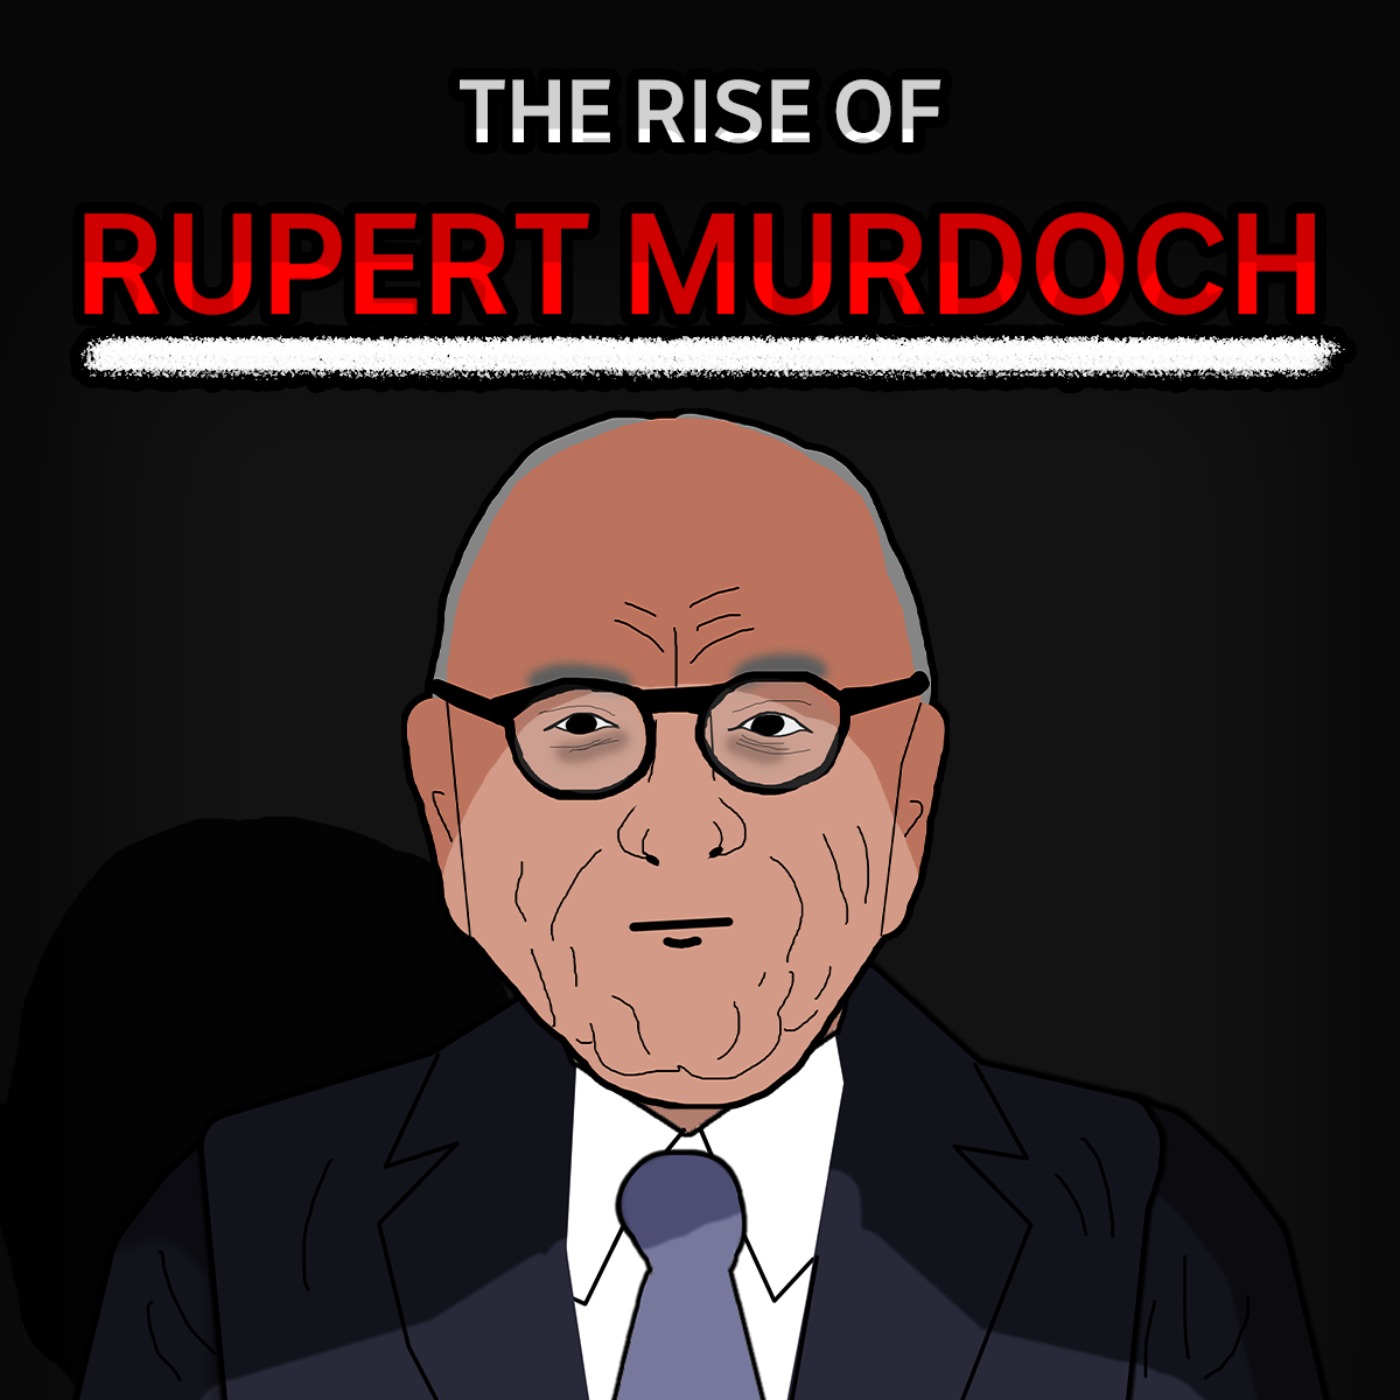 The rise of Rupert Murdoch's media empire